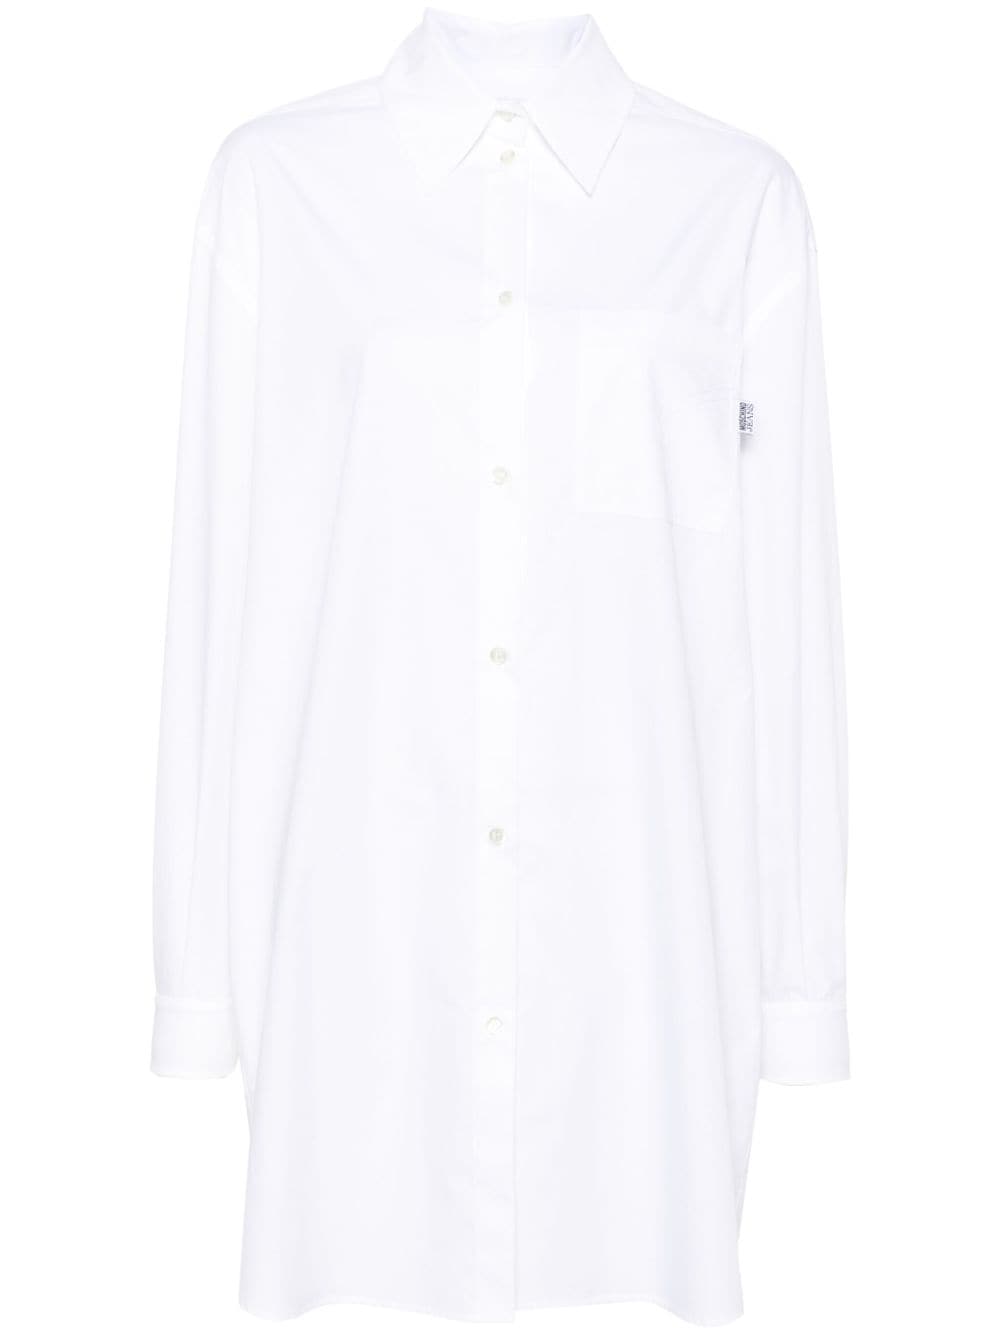 MOSCHINO JEANS cotton shirt dress - White von MOSCHINO JEANS